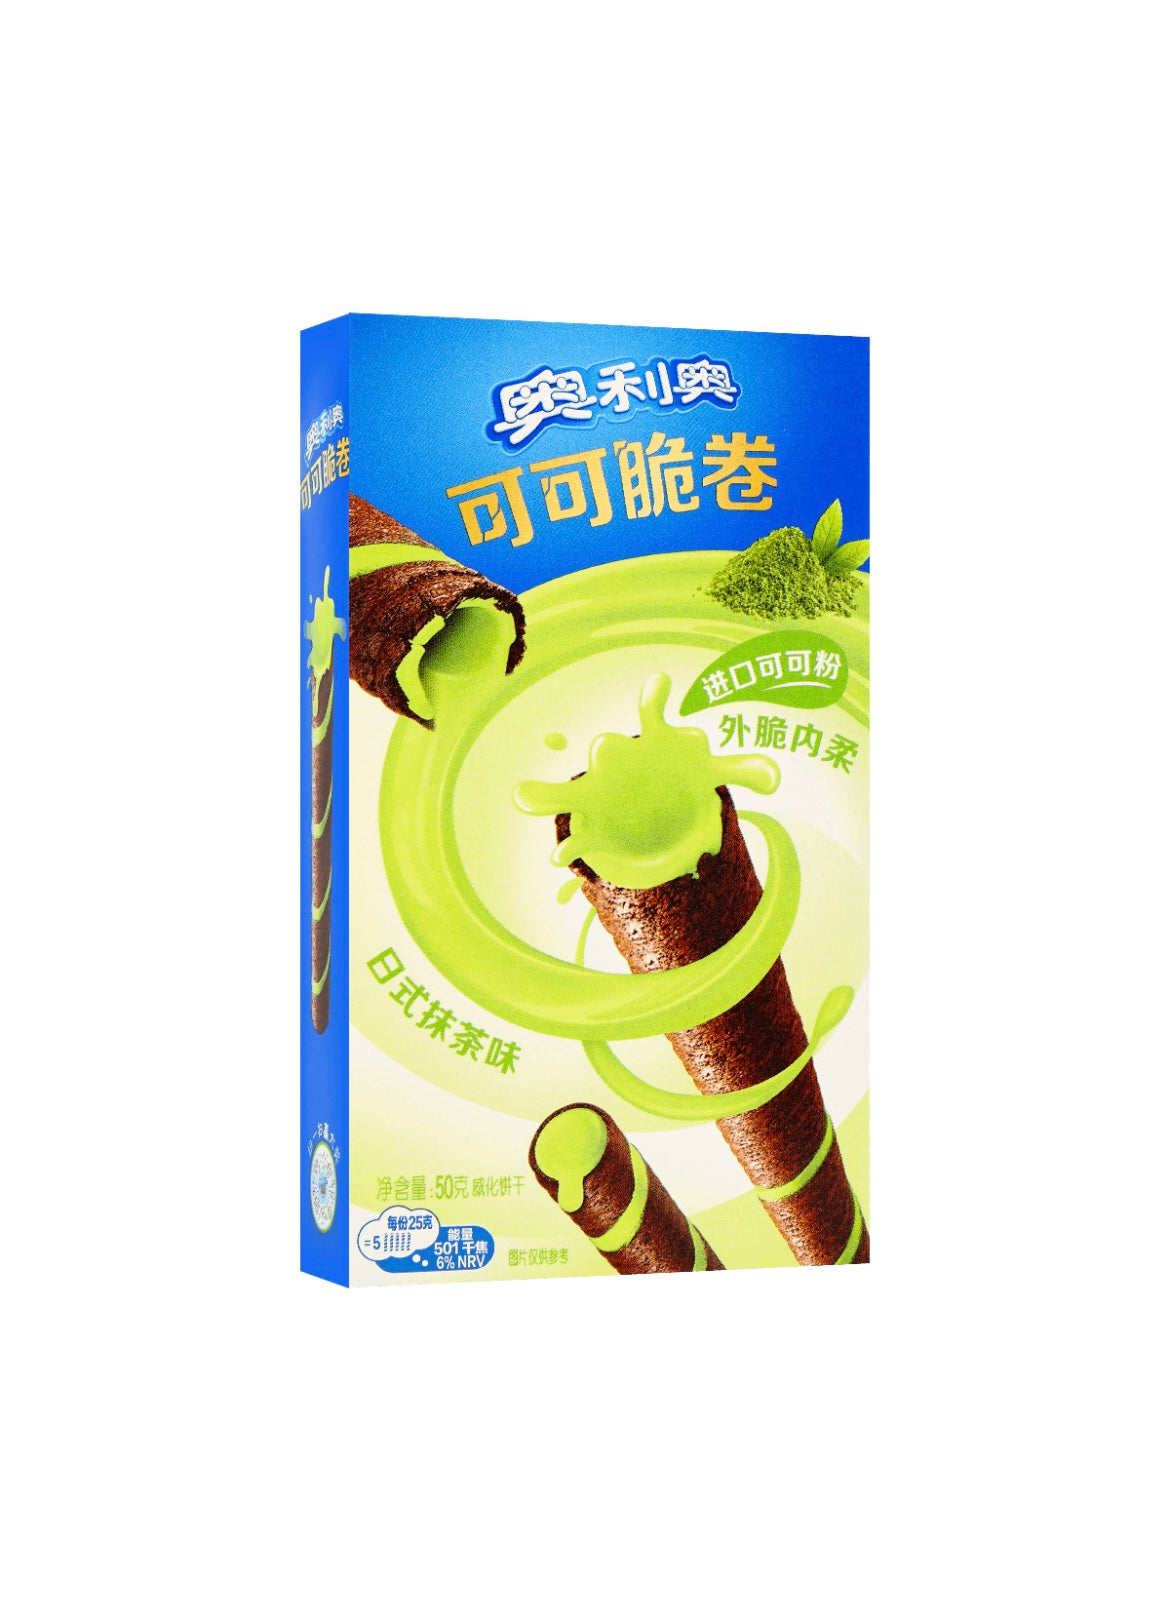 Oreo Wafer Rolls Matcha flavor (China)